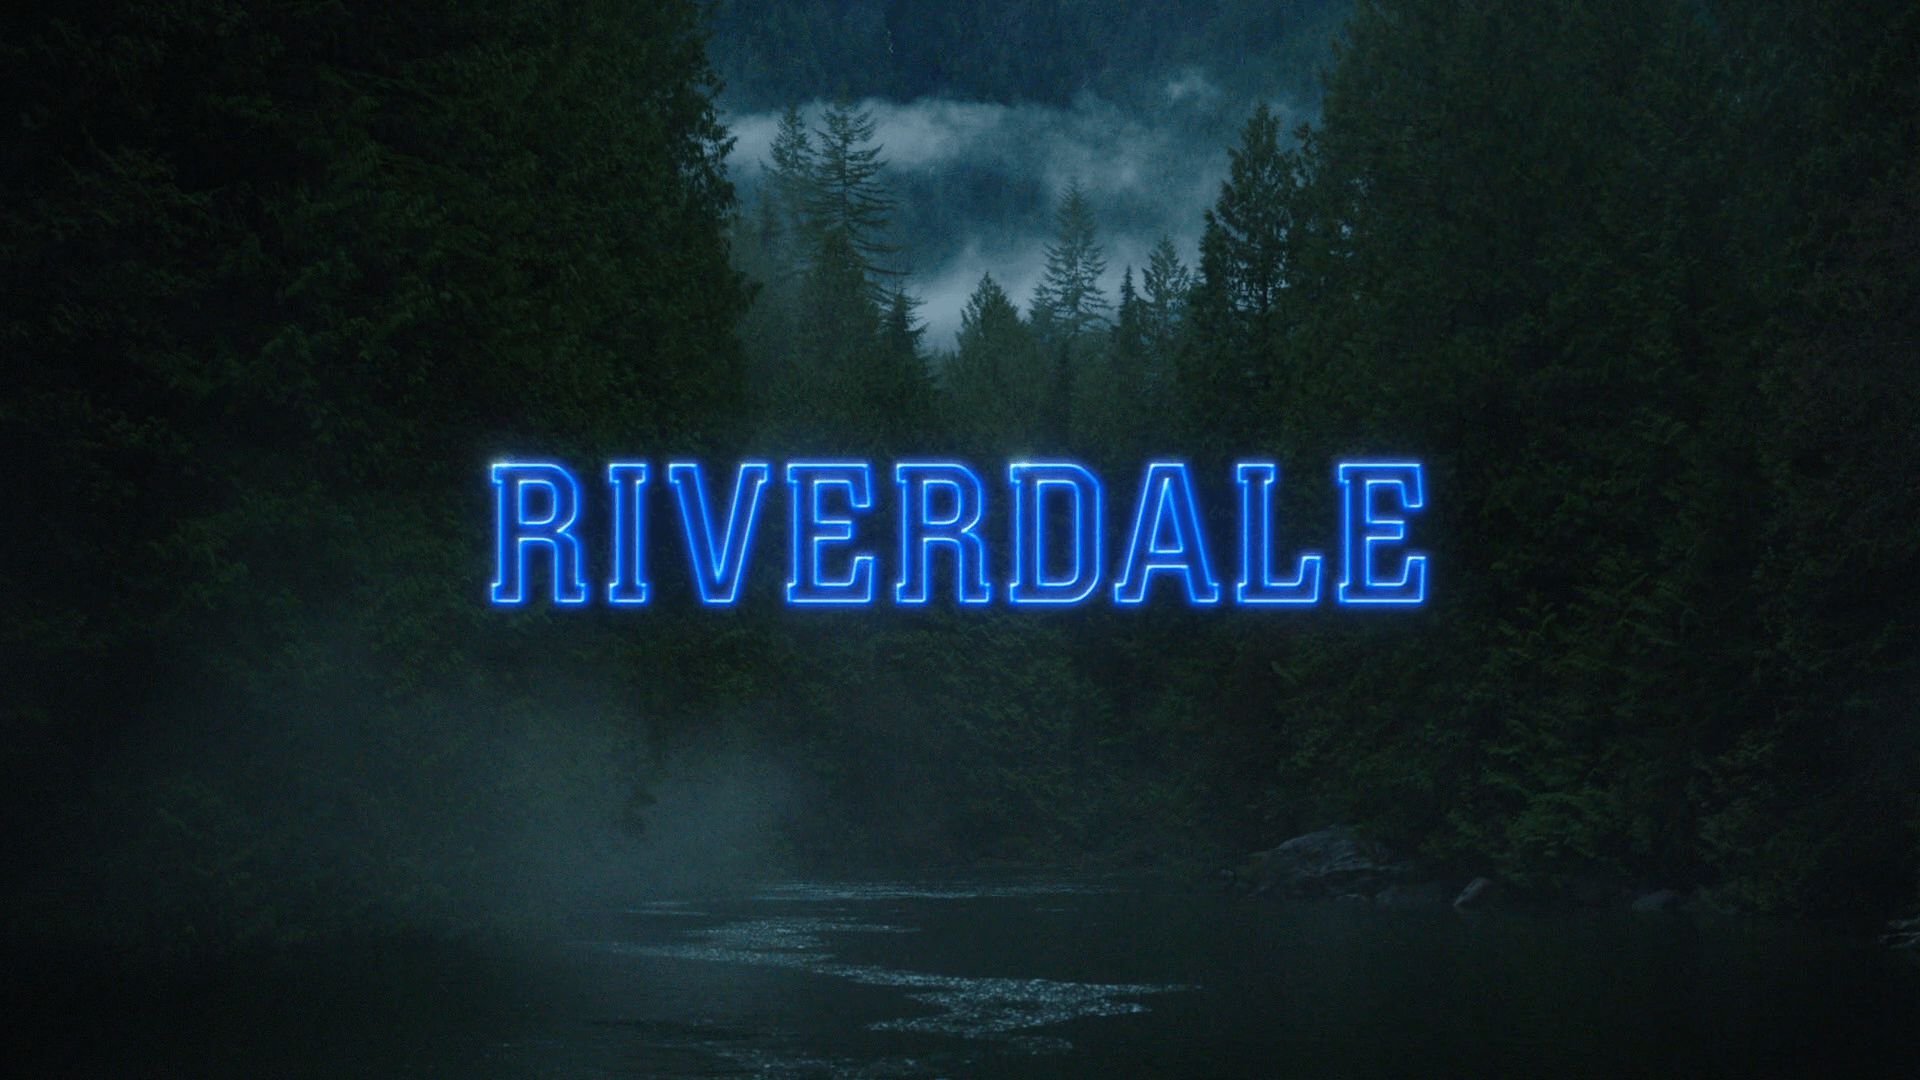 Riverdale. Riverdale aesthetic